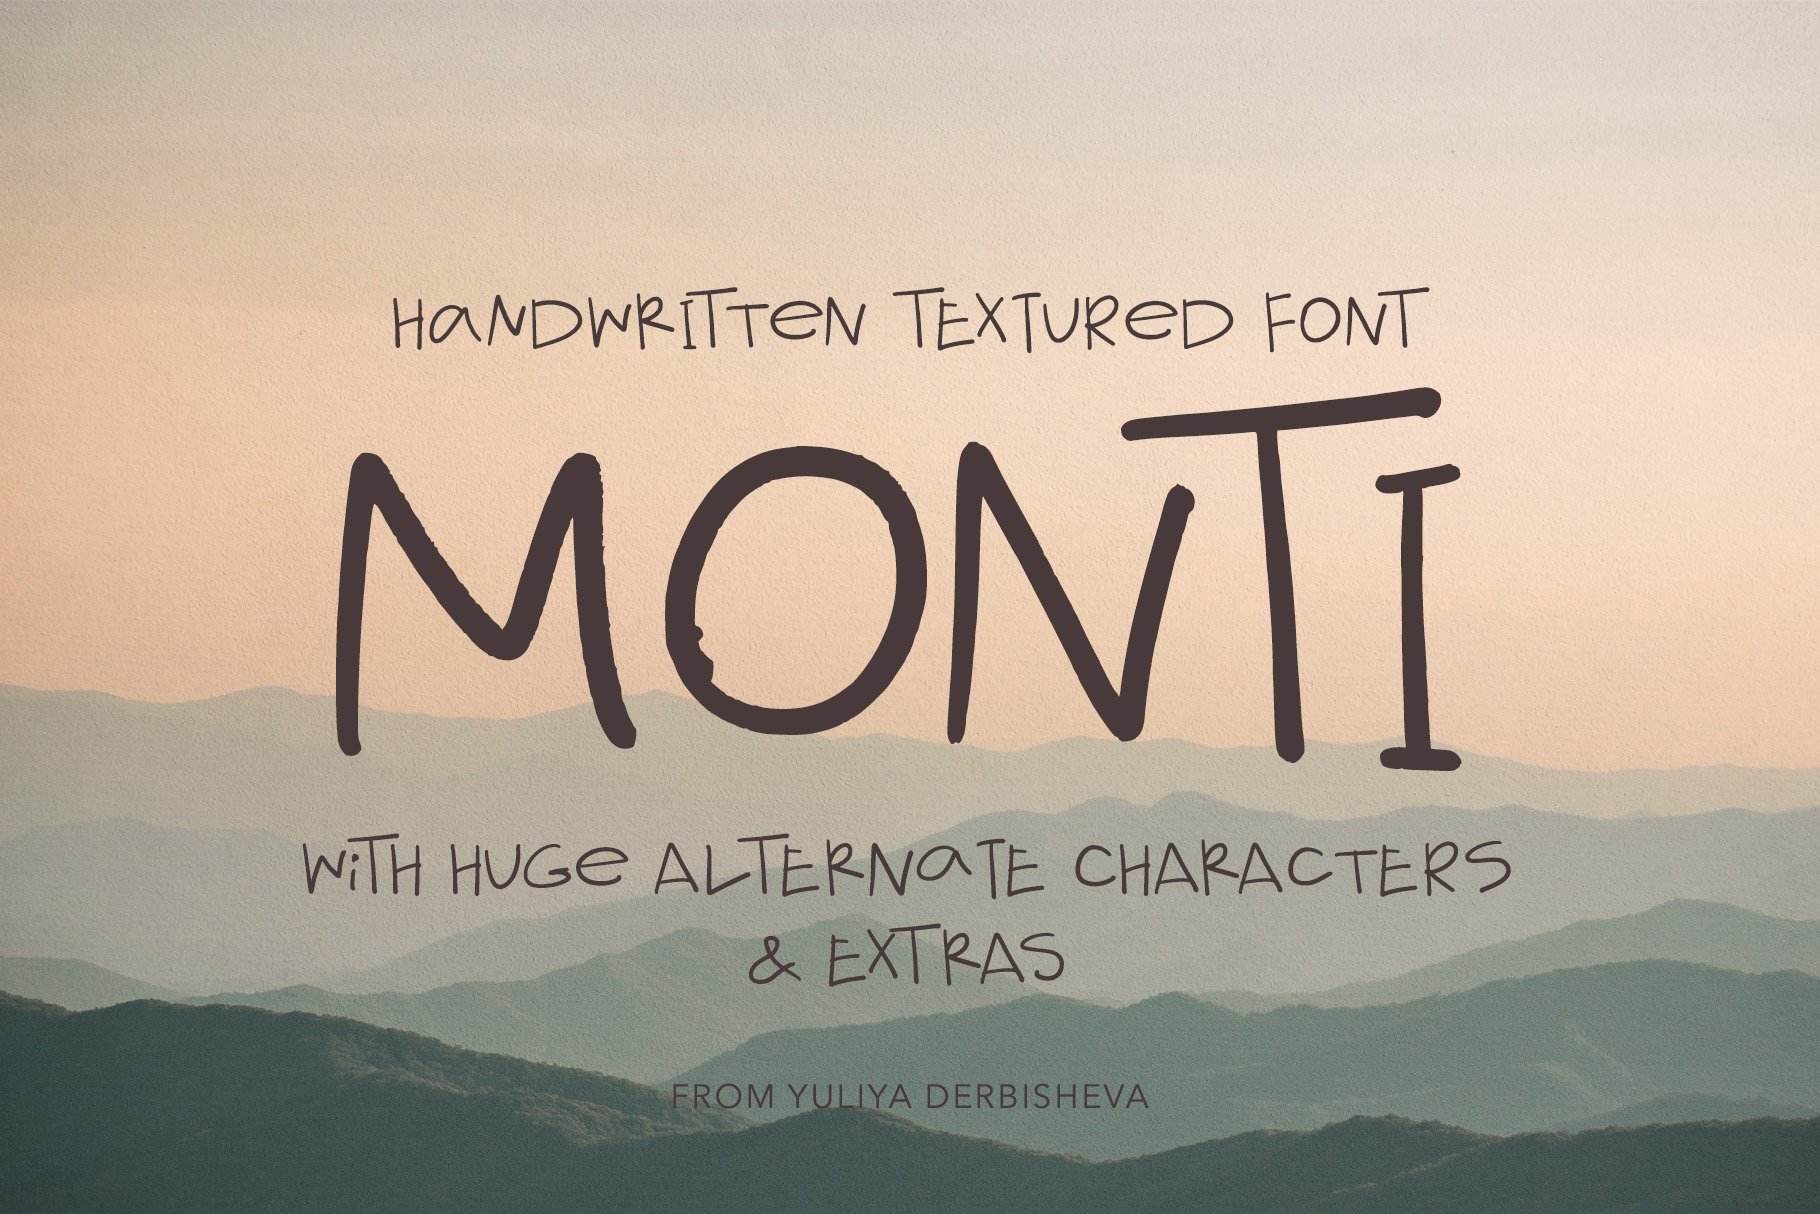 MONTI handwritten textured typeface cover image.